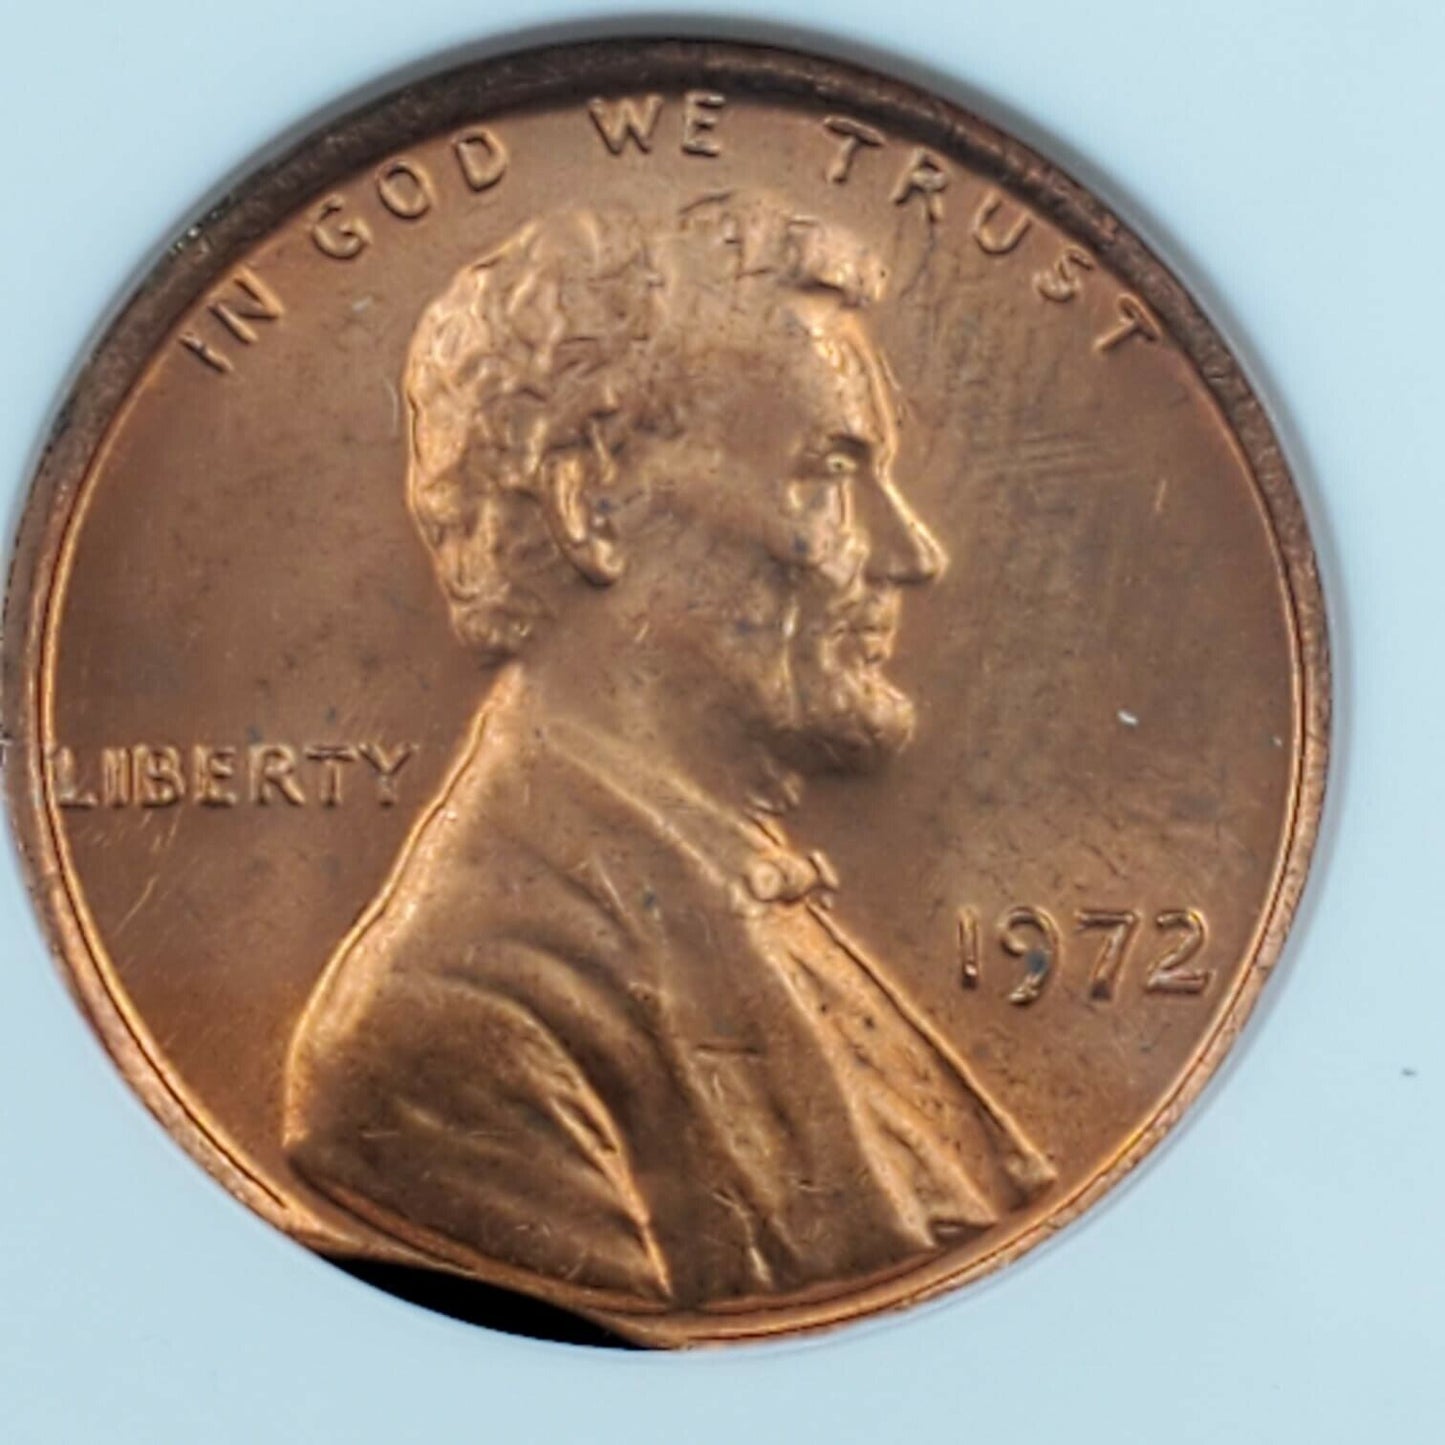 1972 P Lincoln Memorial Cent Penny Coin ANACS MS64 Error Clipped Rim Planchet